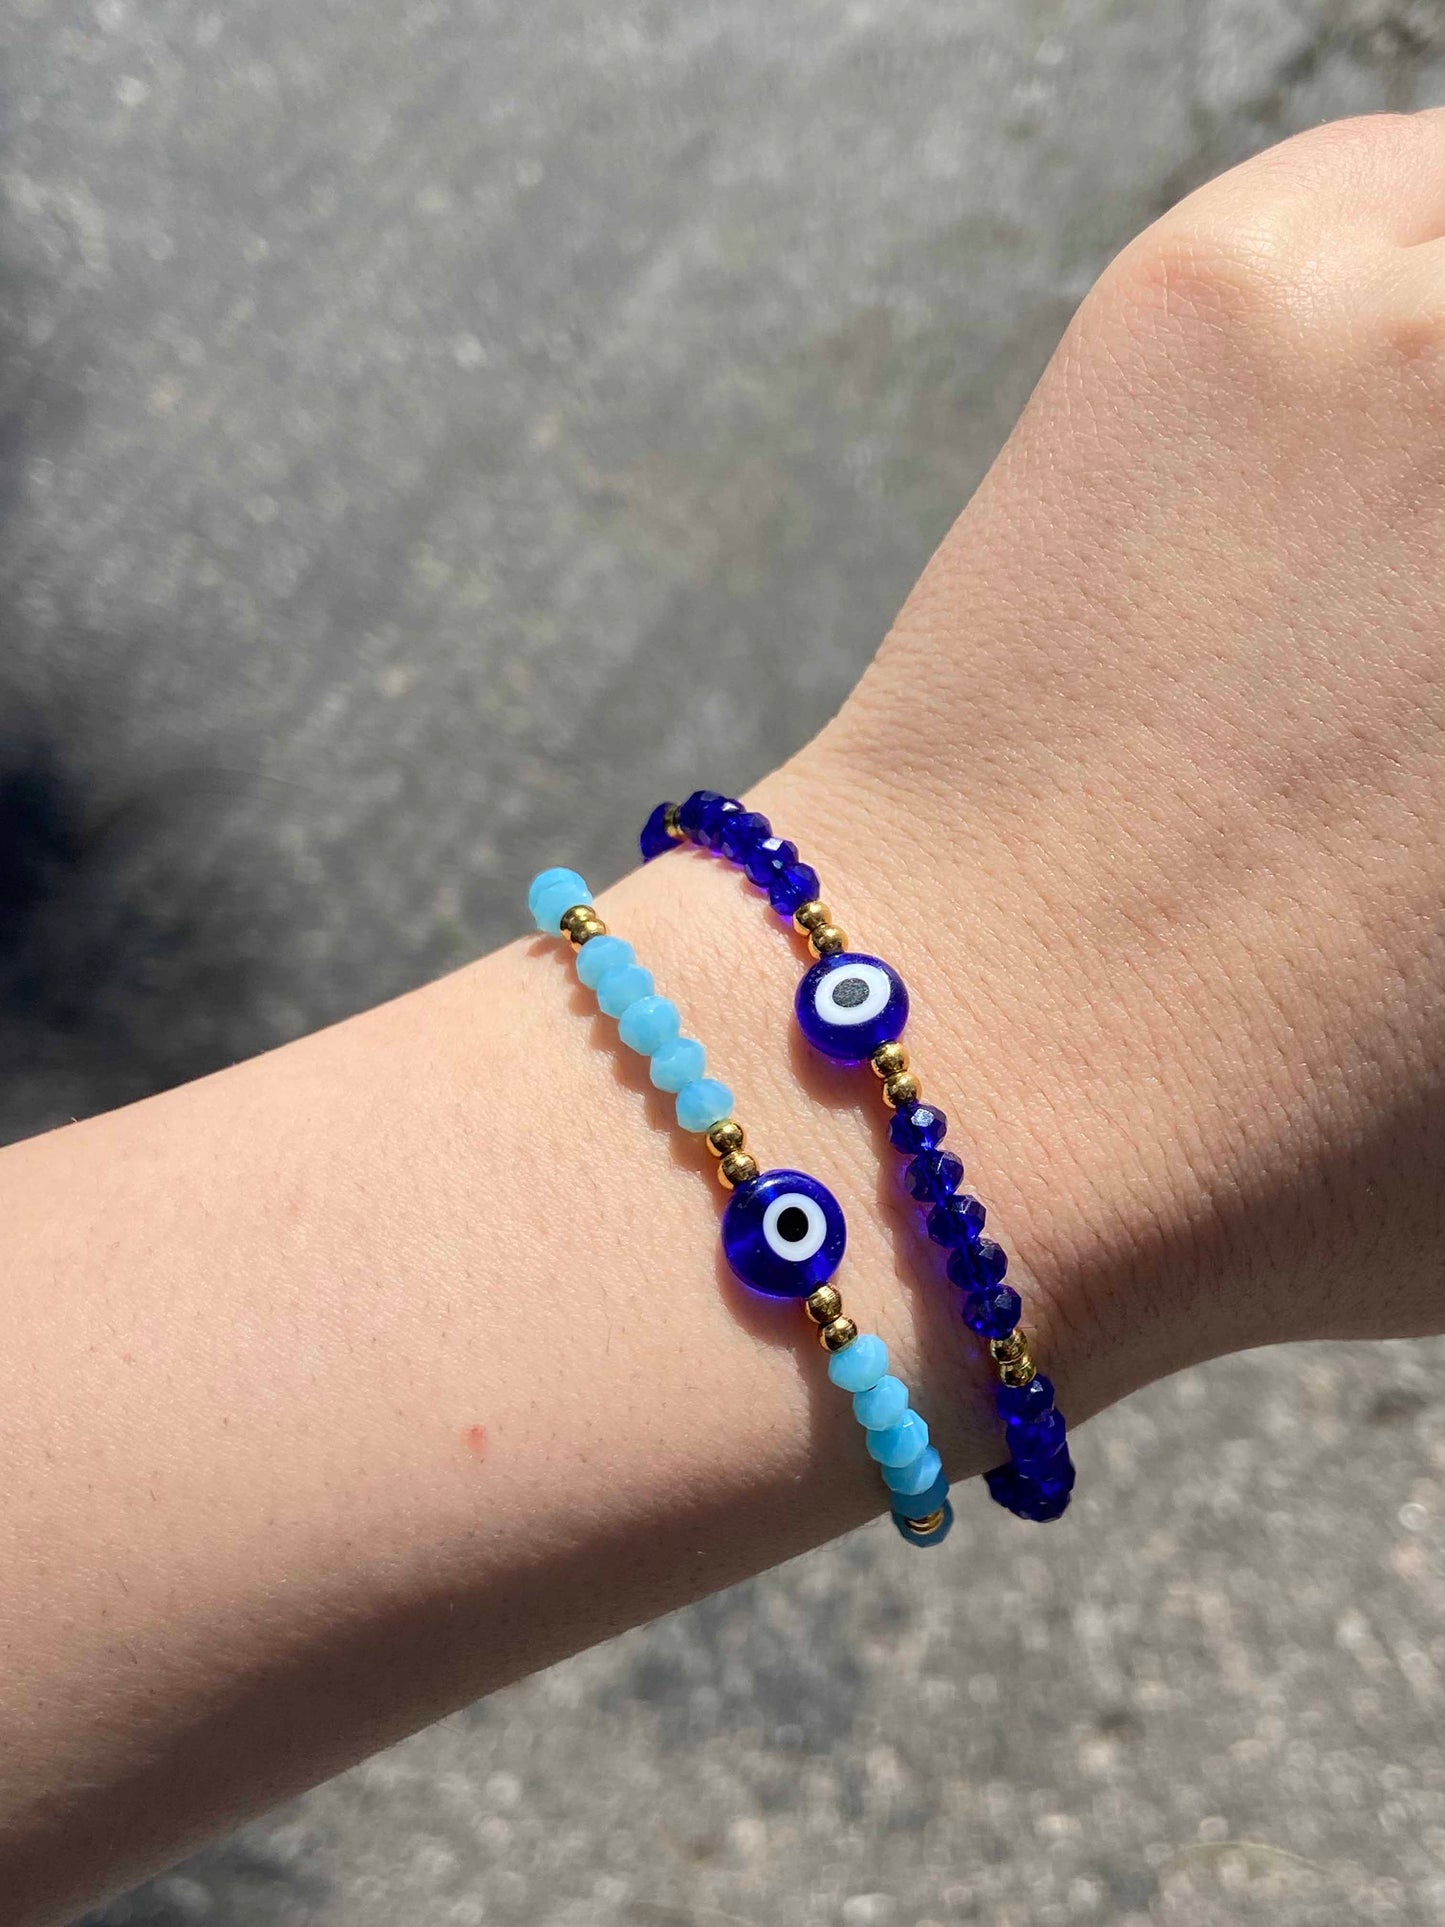 Handmade blue crystal beaded nazar amulet bracelets with sliding knot ties. 